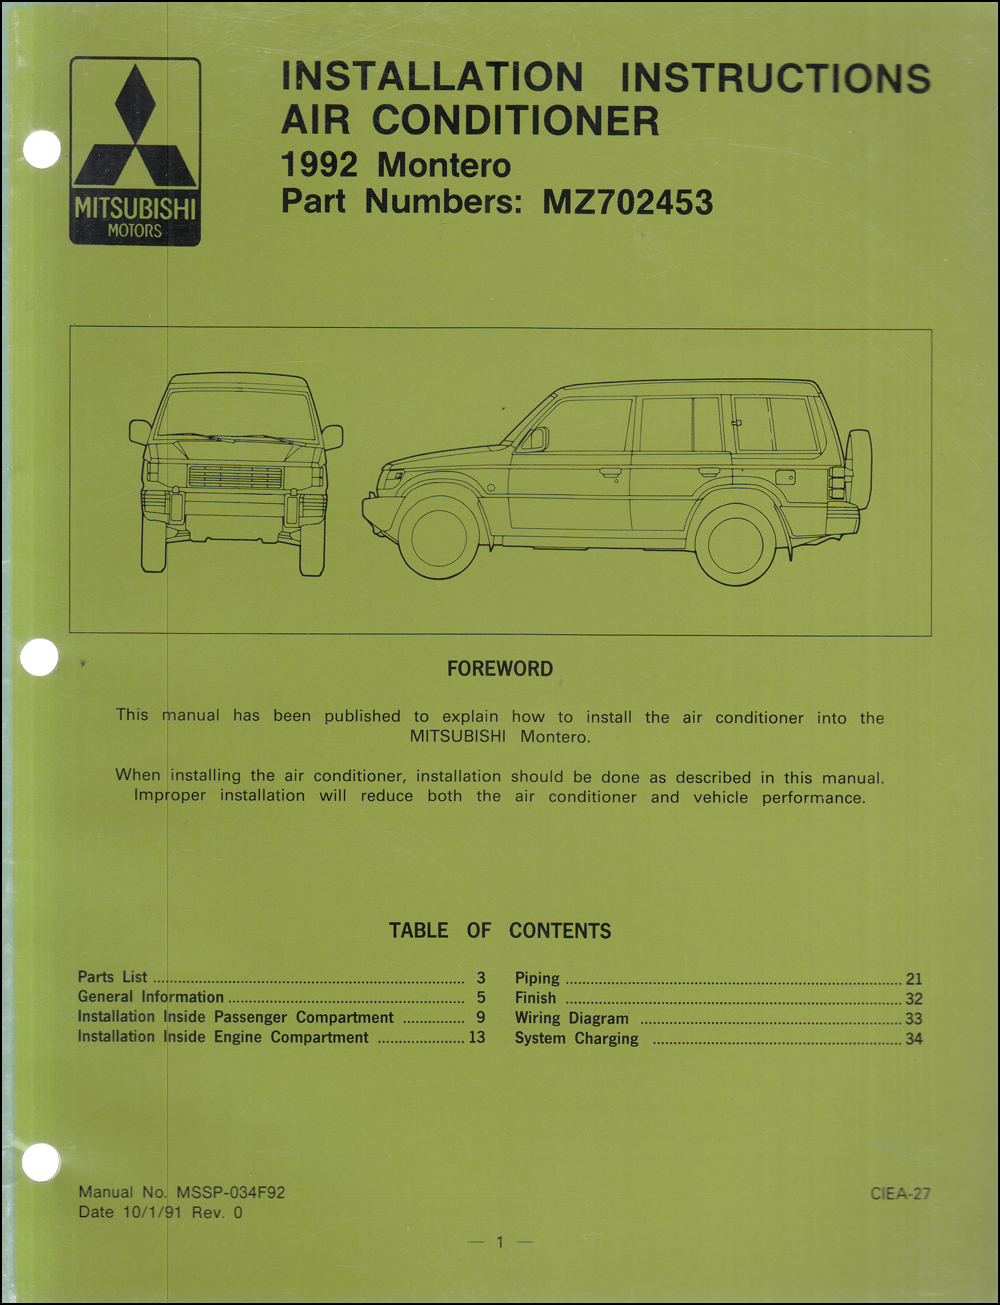 1992 Mitsubishi Montero Air Conditioner Installation Instruction Manual Original